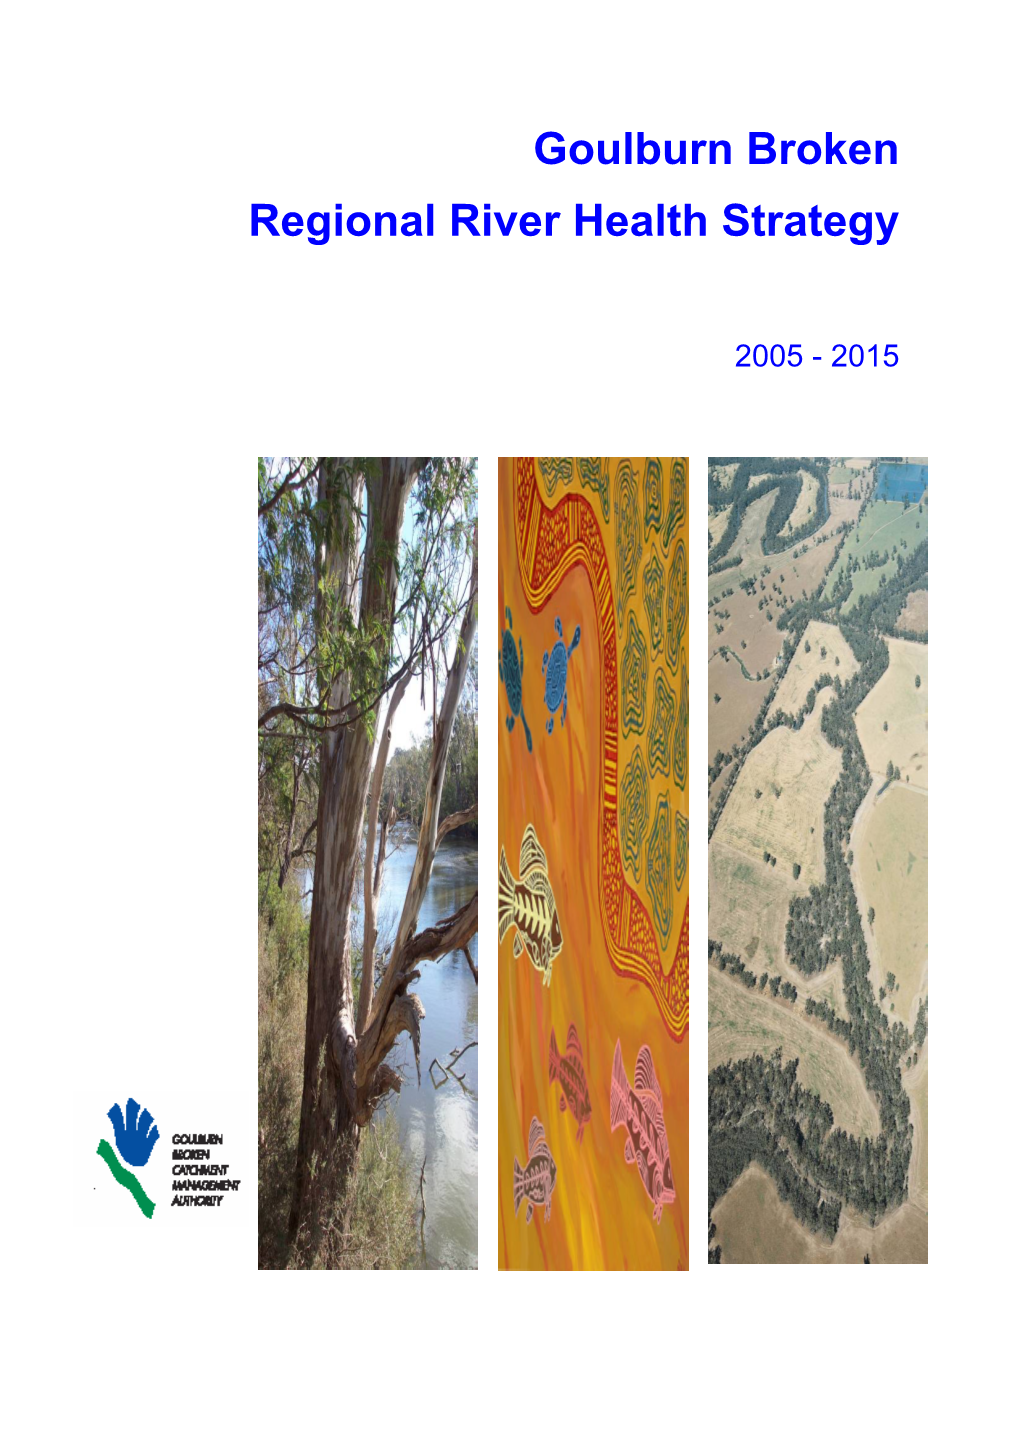 Goulburn Broken Regional River Health Strategy